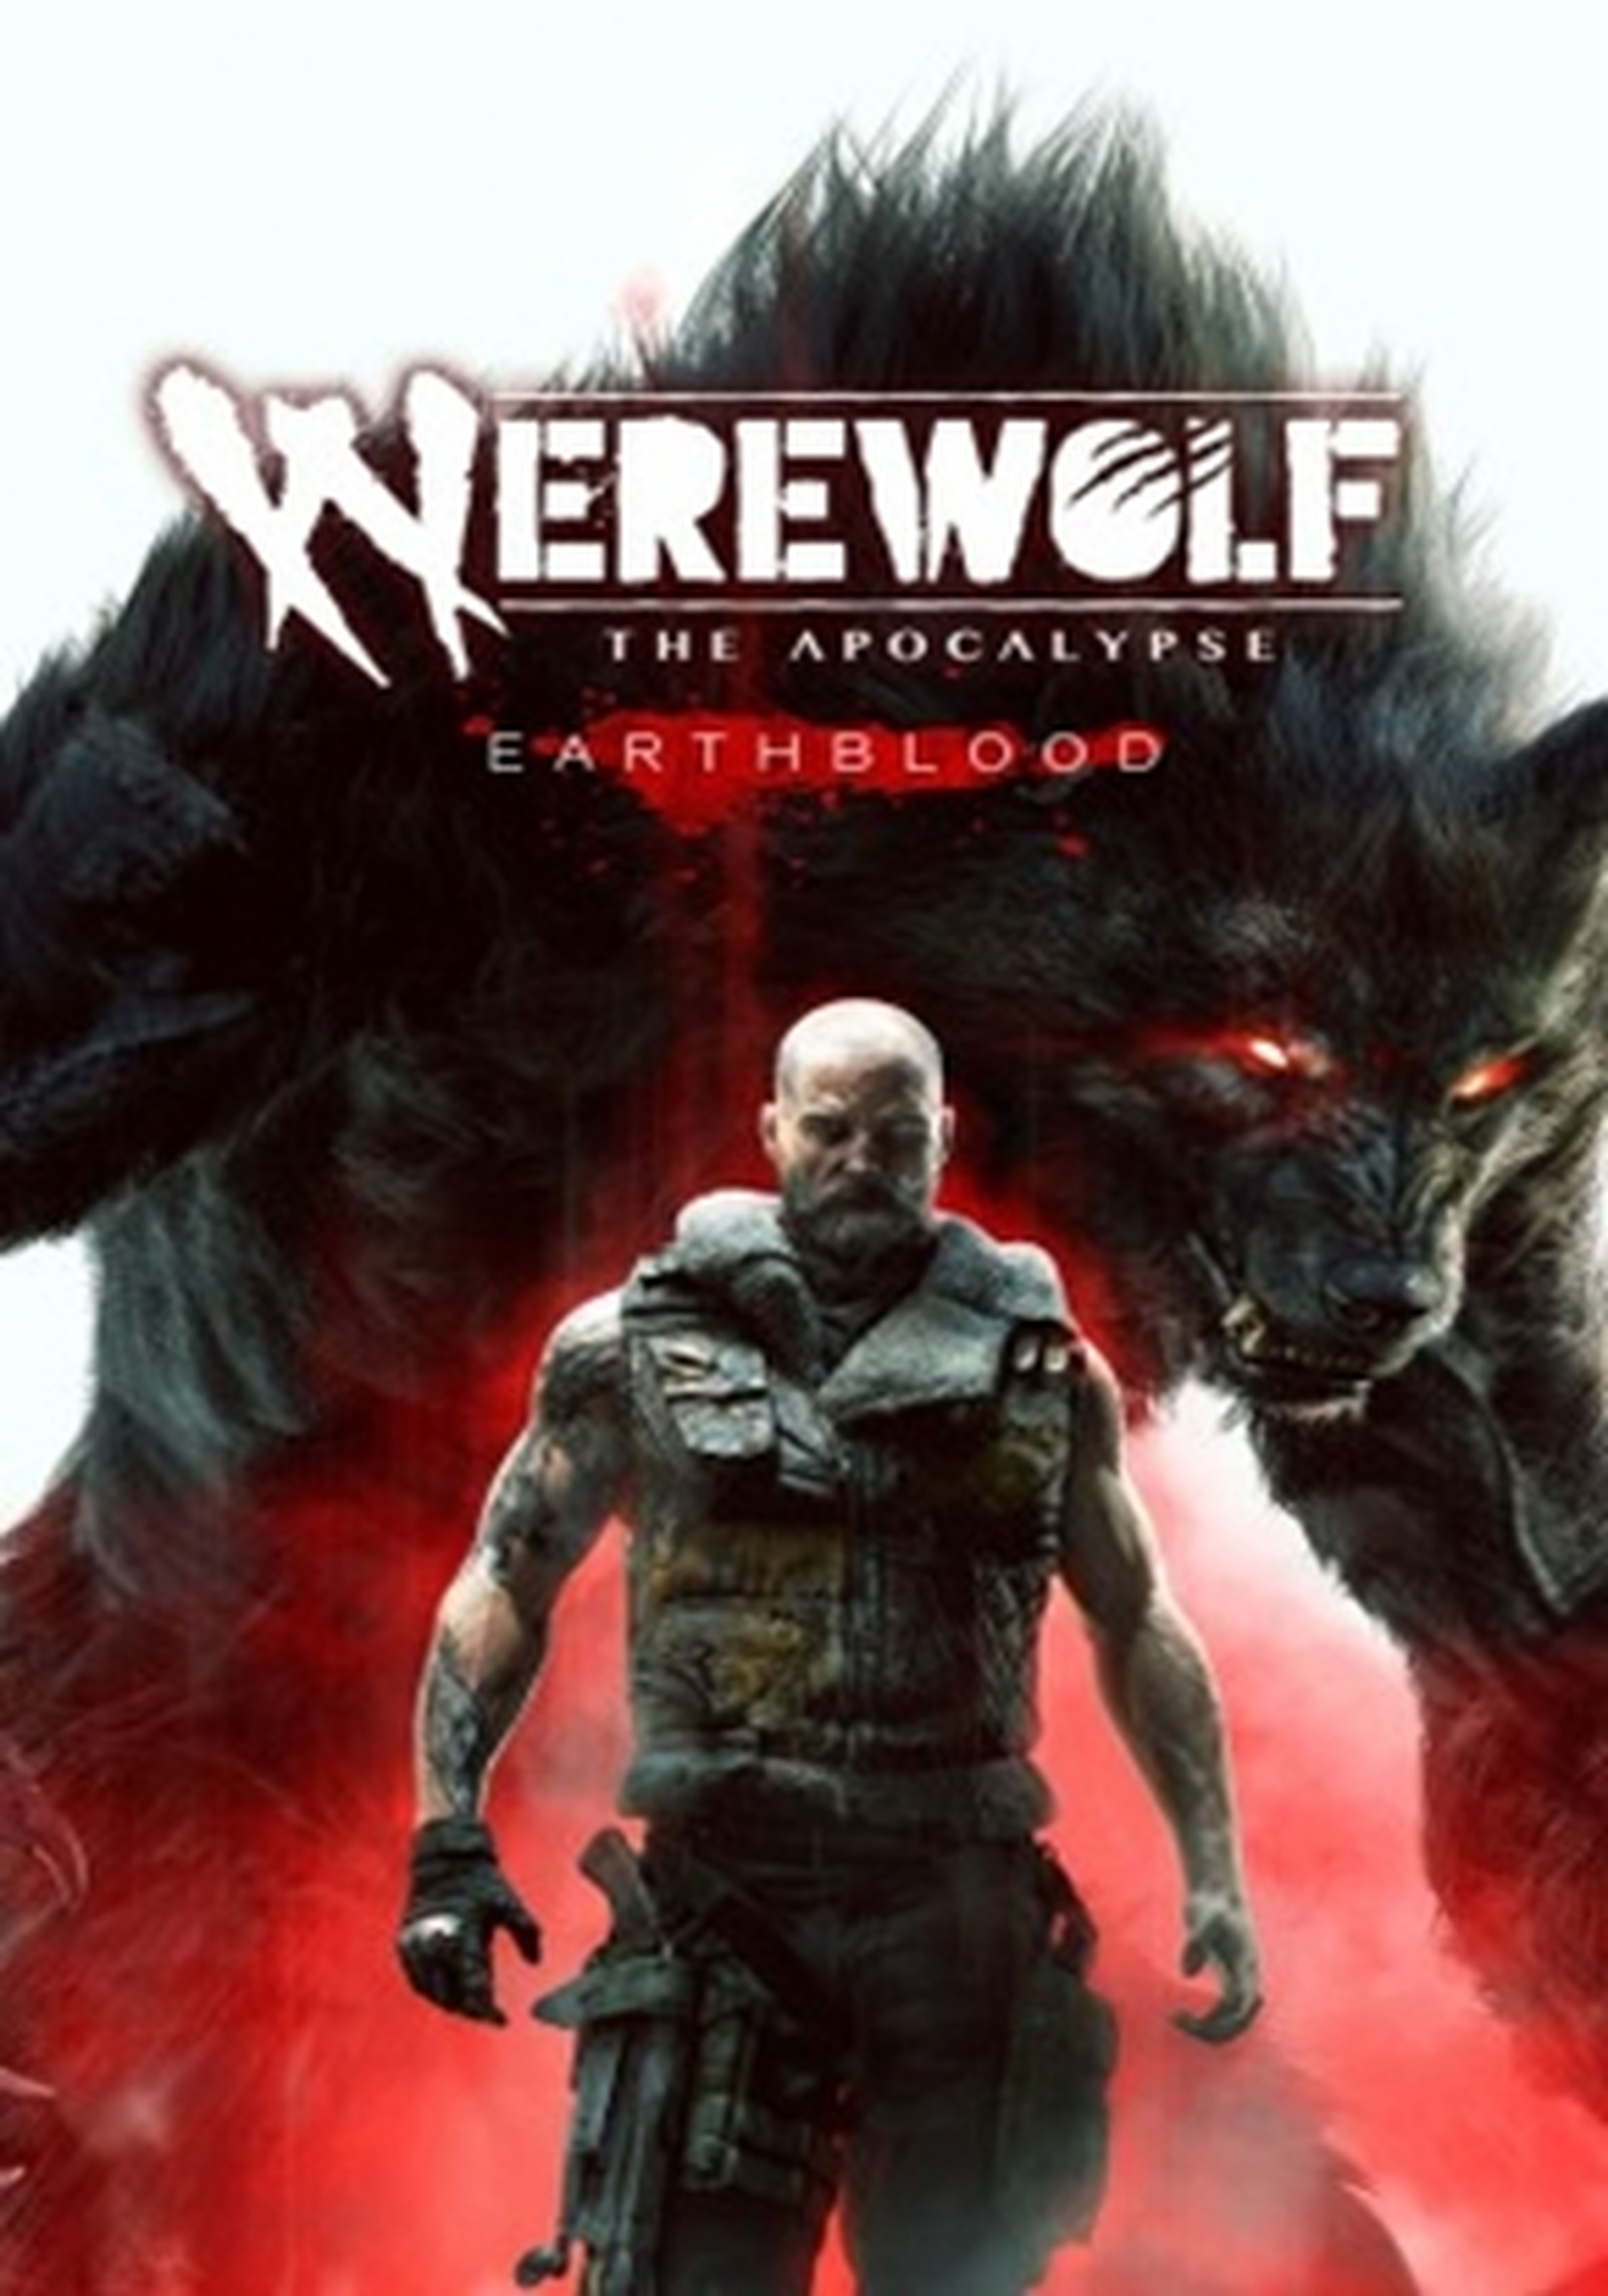 Werewolf the Apocalypse Earthblood cartel